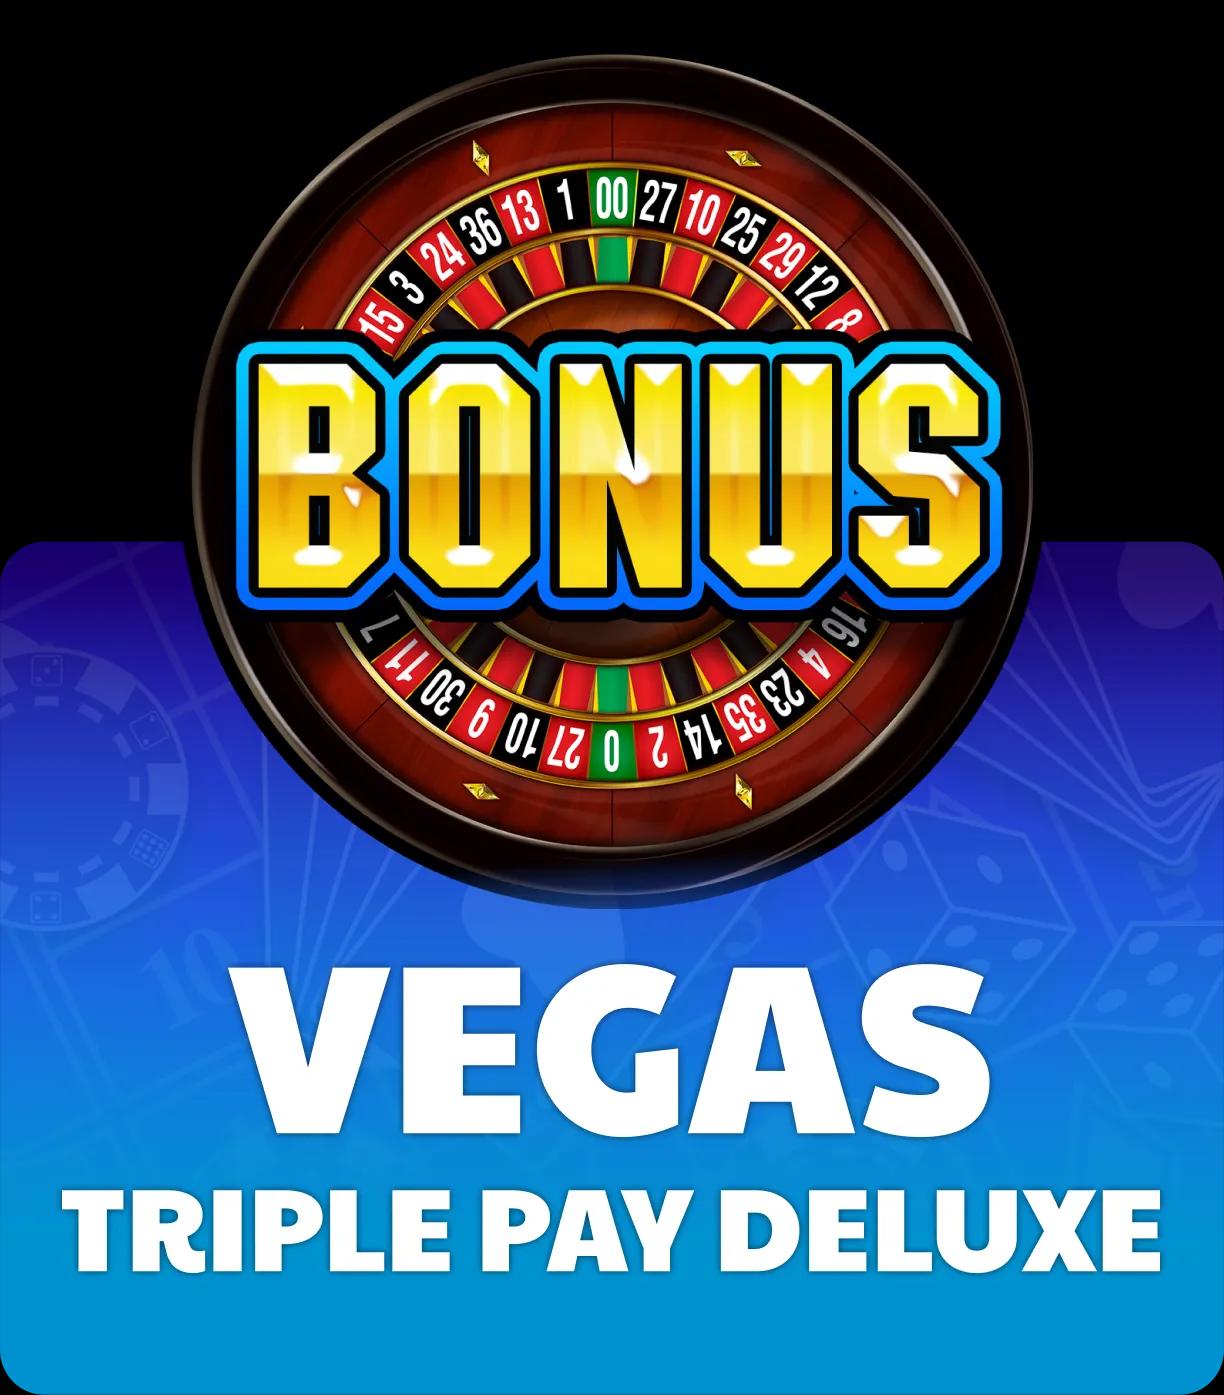 Vegas Triple Pay Deluxe Video Slot